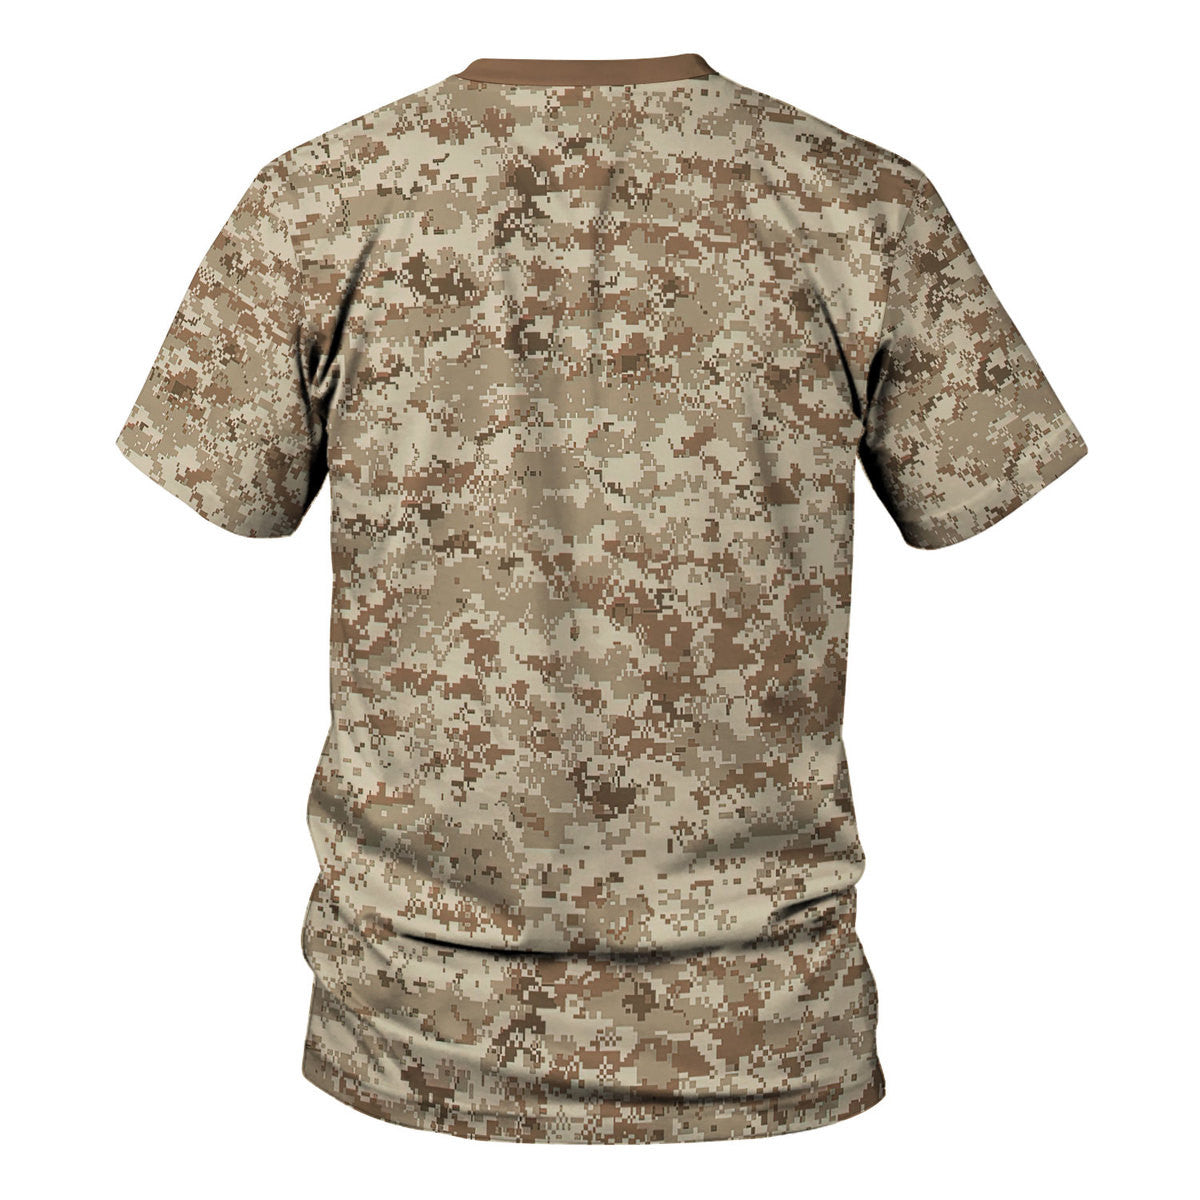 American Navy Working Uniform (NWU) Type II Camo T-shirt